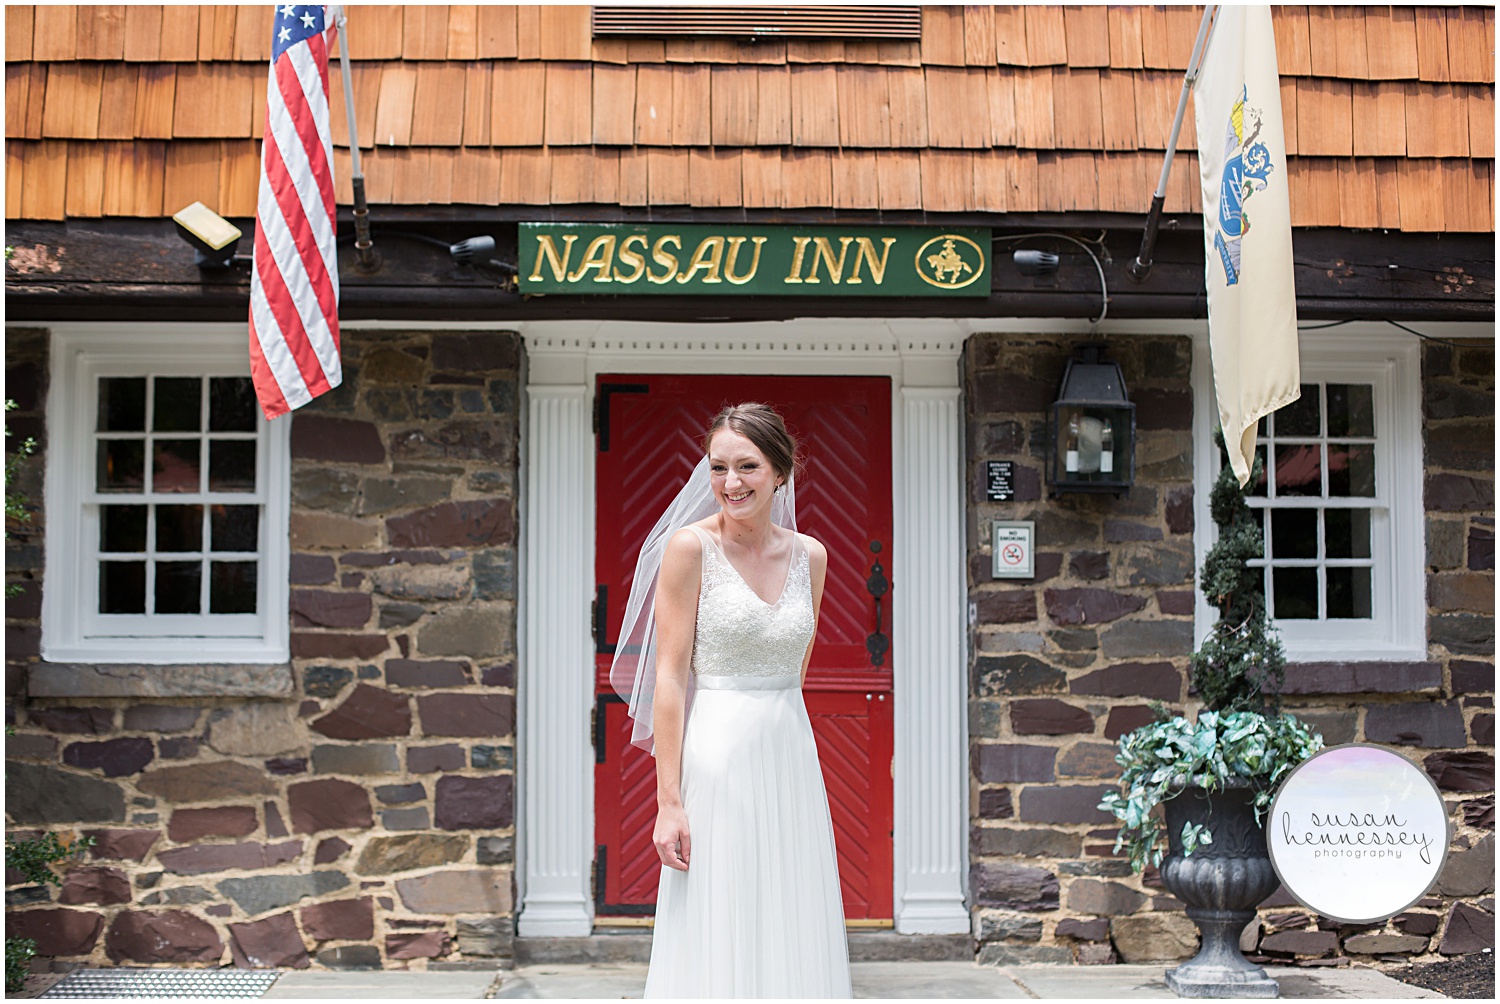 Bridal Portrait of bride in front of the Nassau Inn